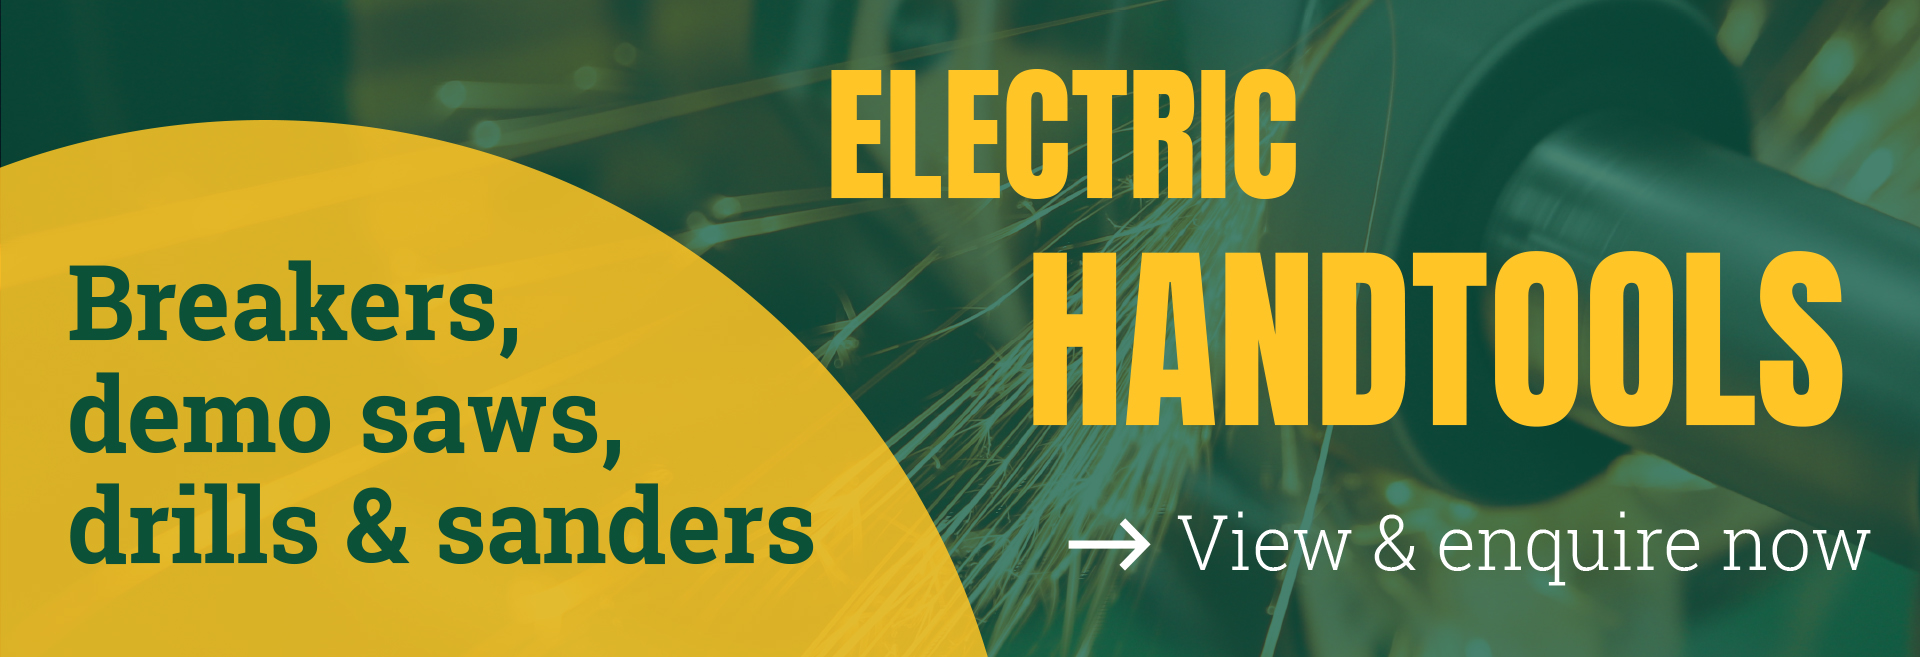 View electric handtools